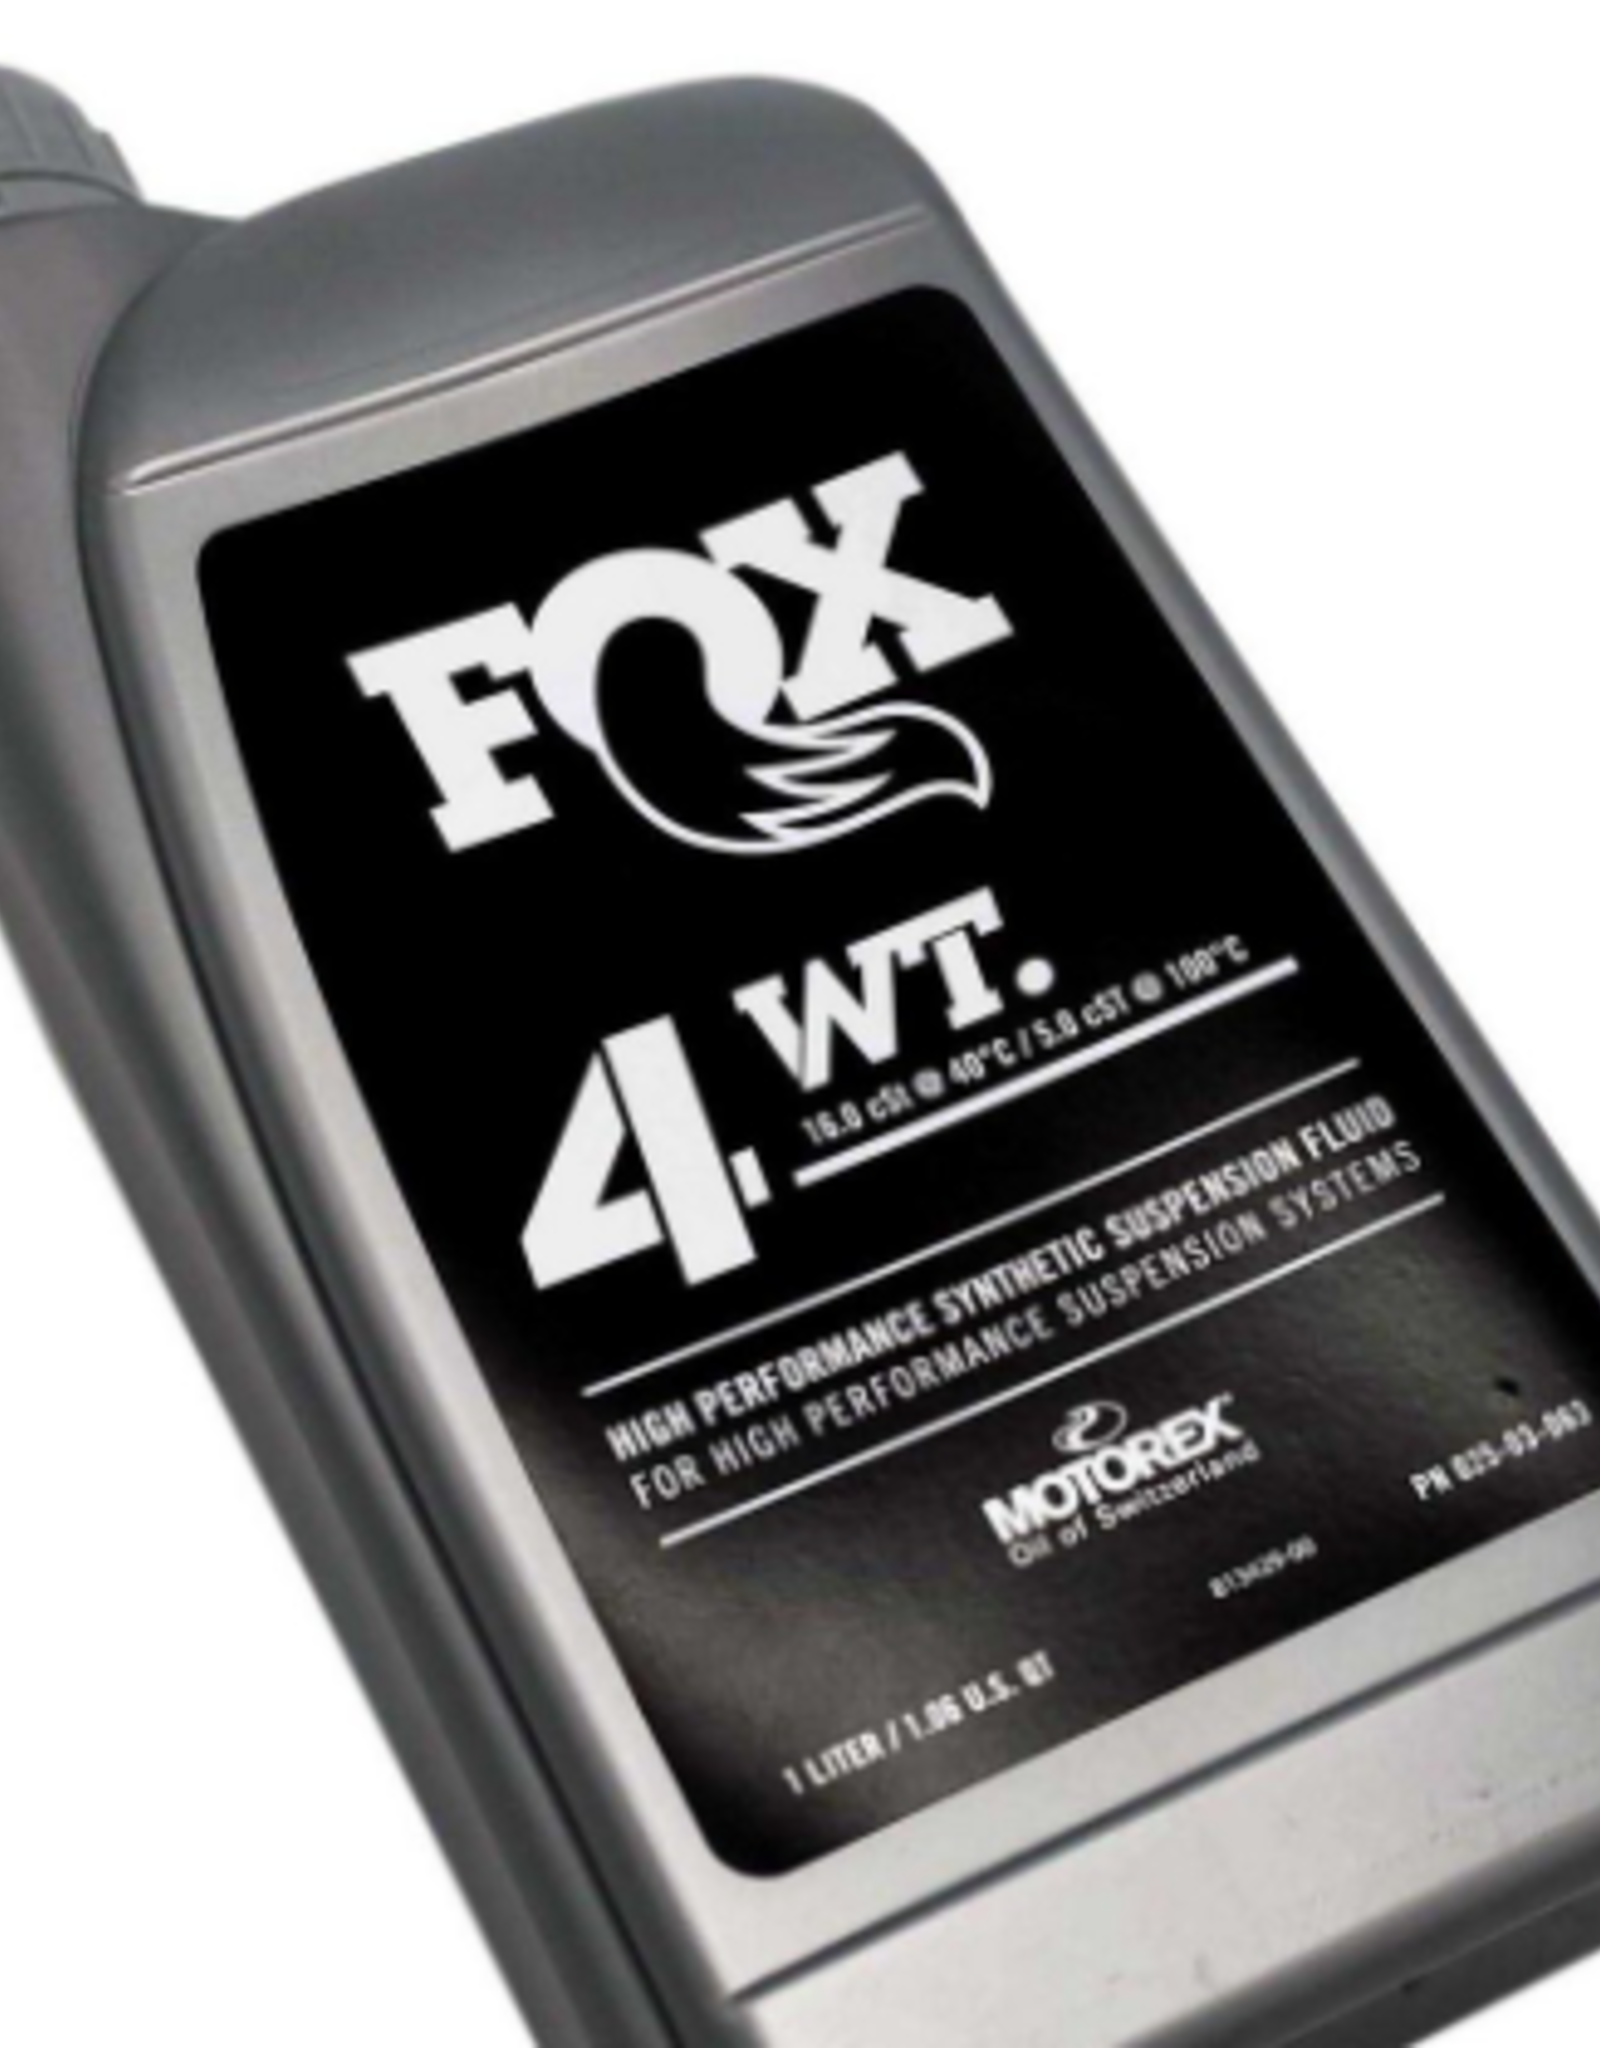 Fox FX 4wt Suspension Oil 1.0 Liter